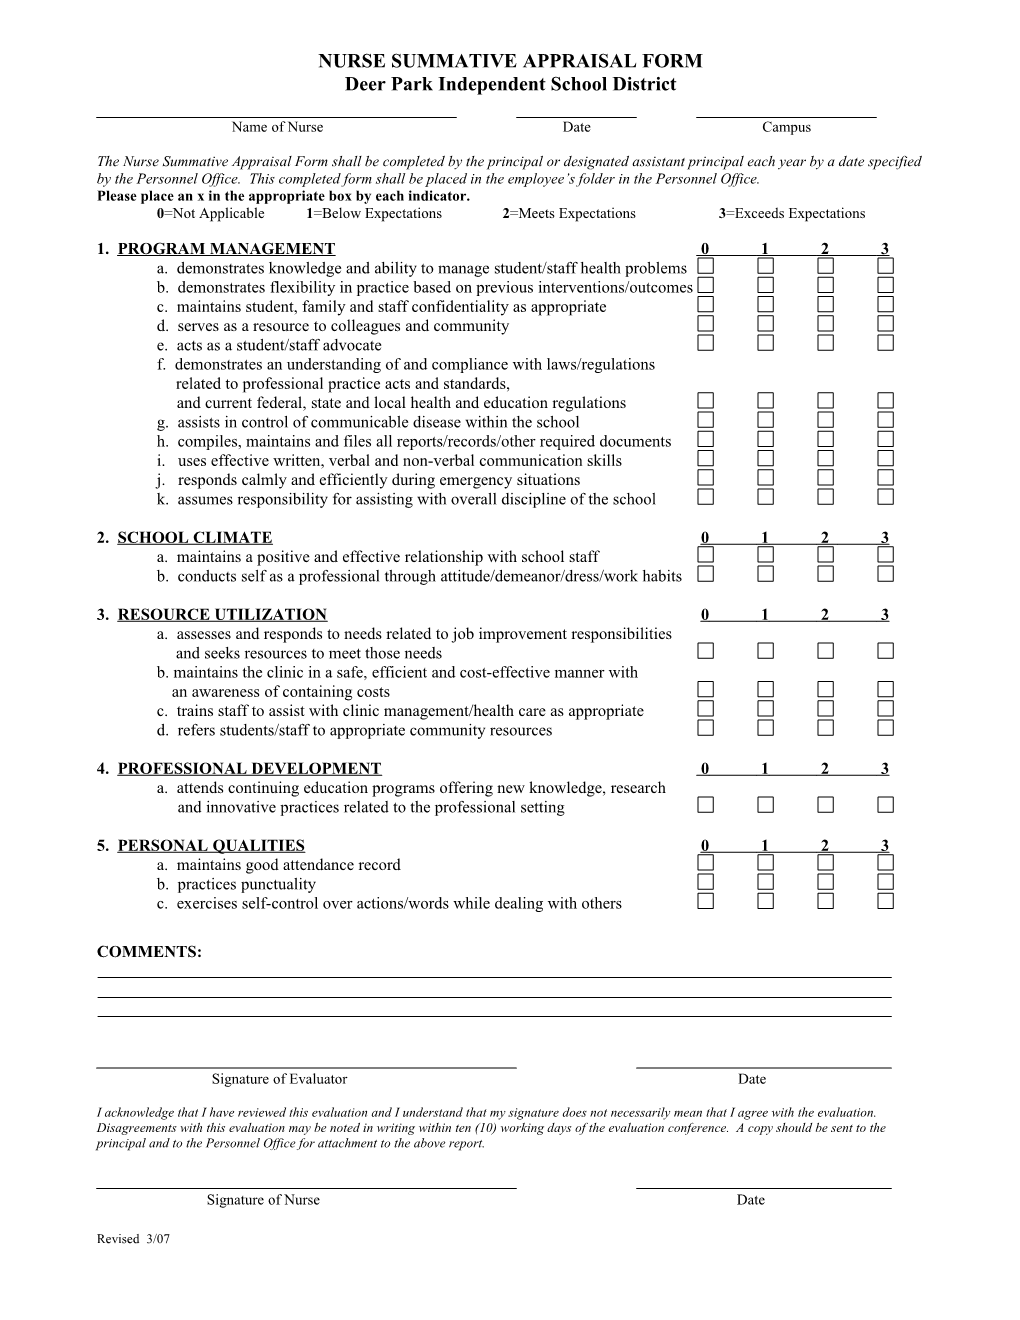 Counselor Summative Appraisal Form